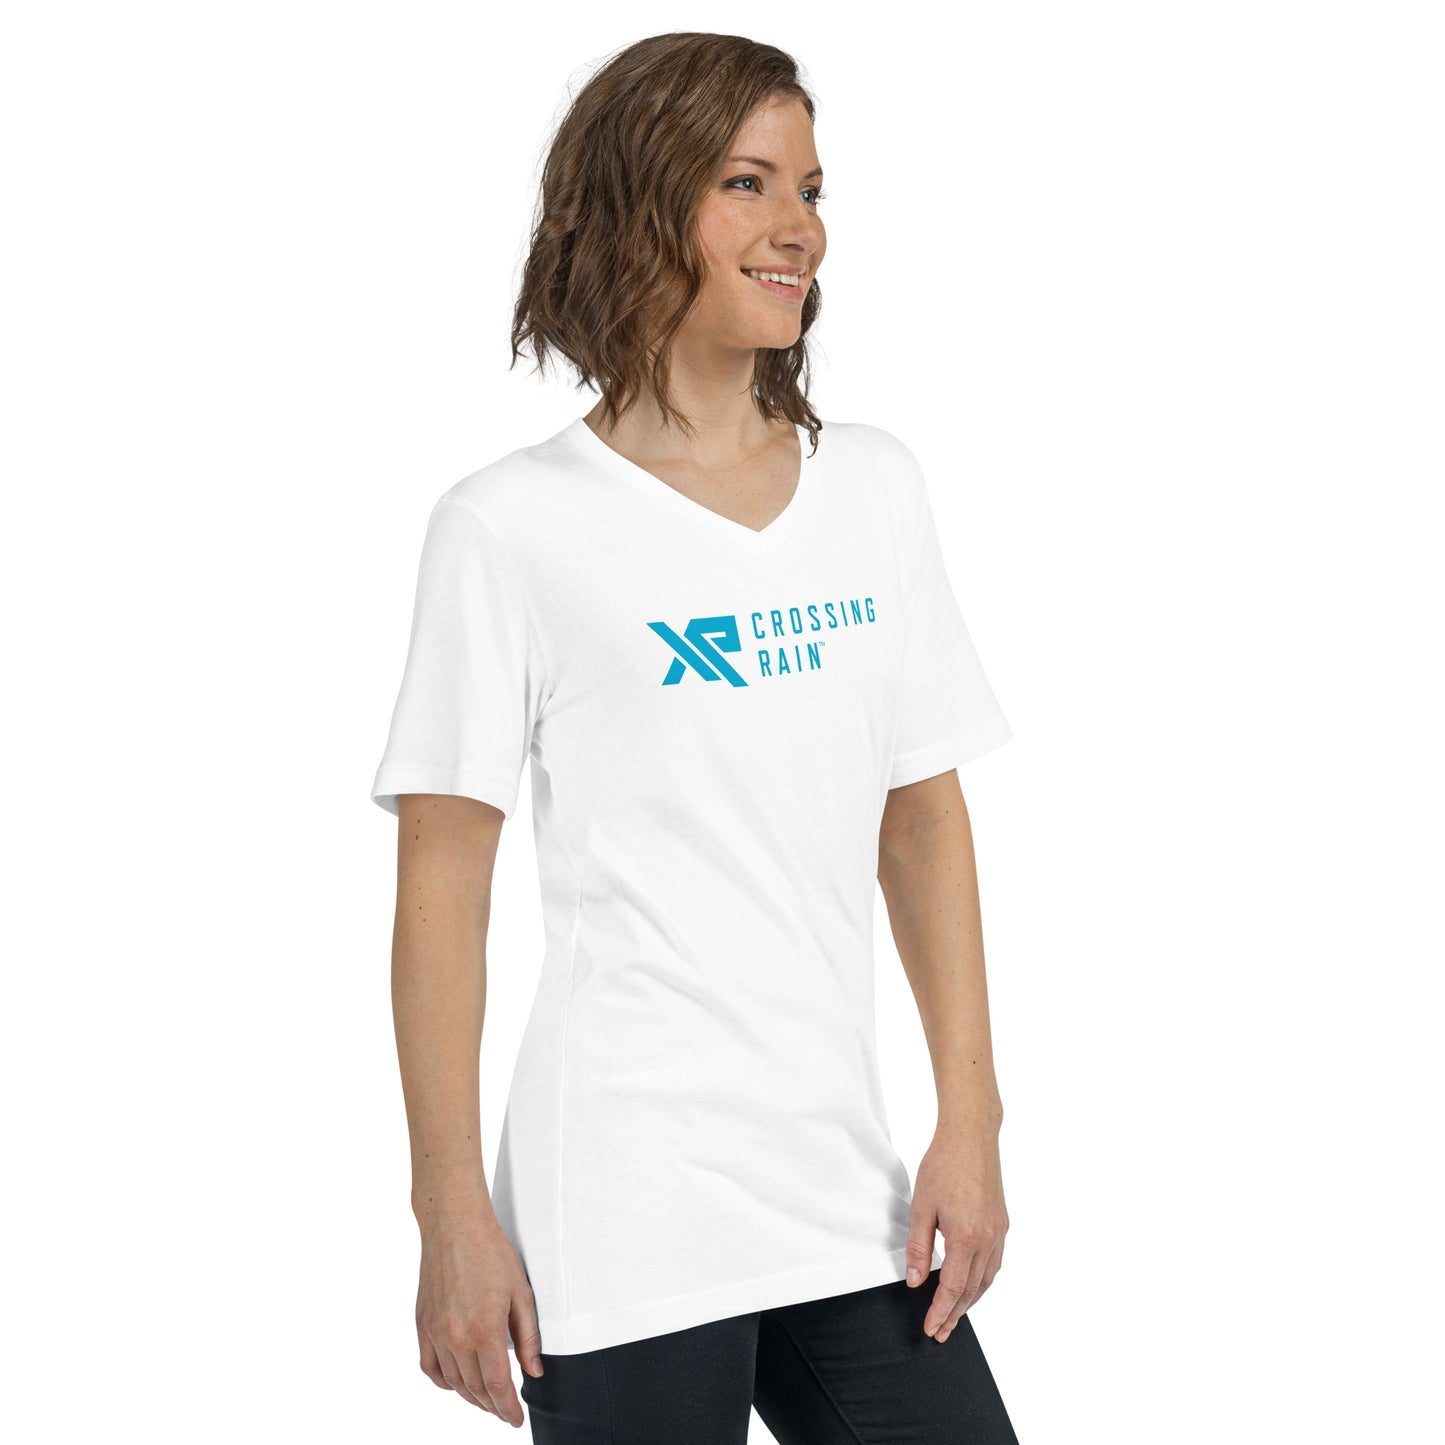 Unisex XR Crossing Rain Short Sleeve V-Neck T-Shirt